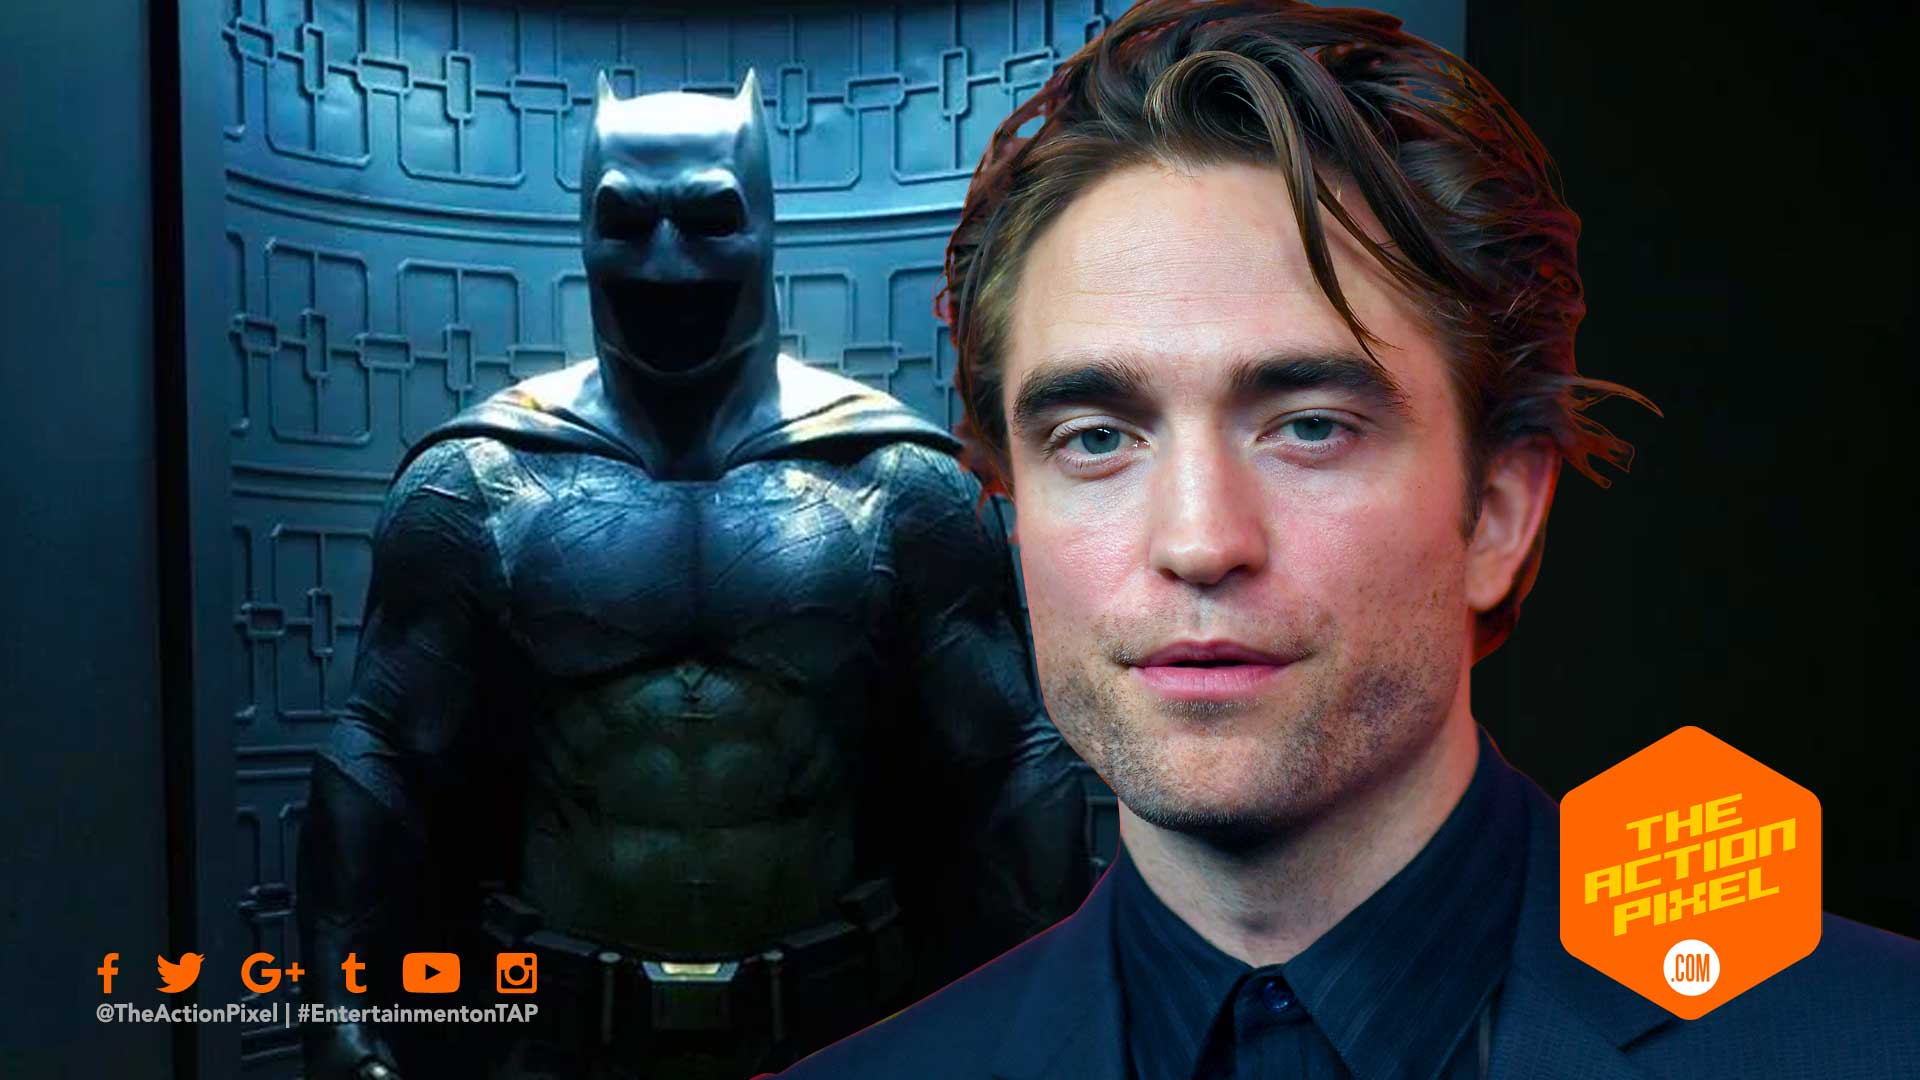 Robert Pattinson cast as the Dark Knight in “The Batman” movie